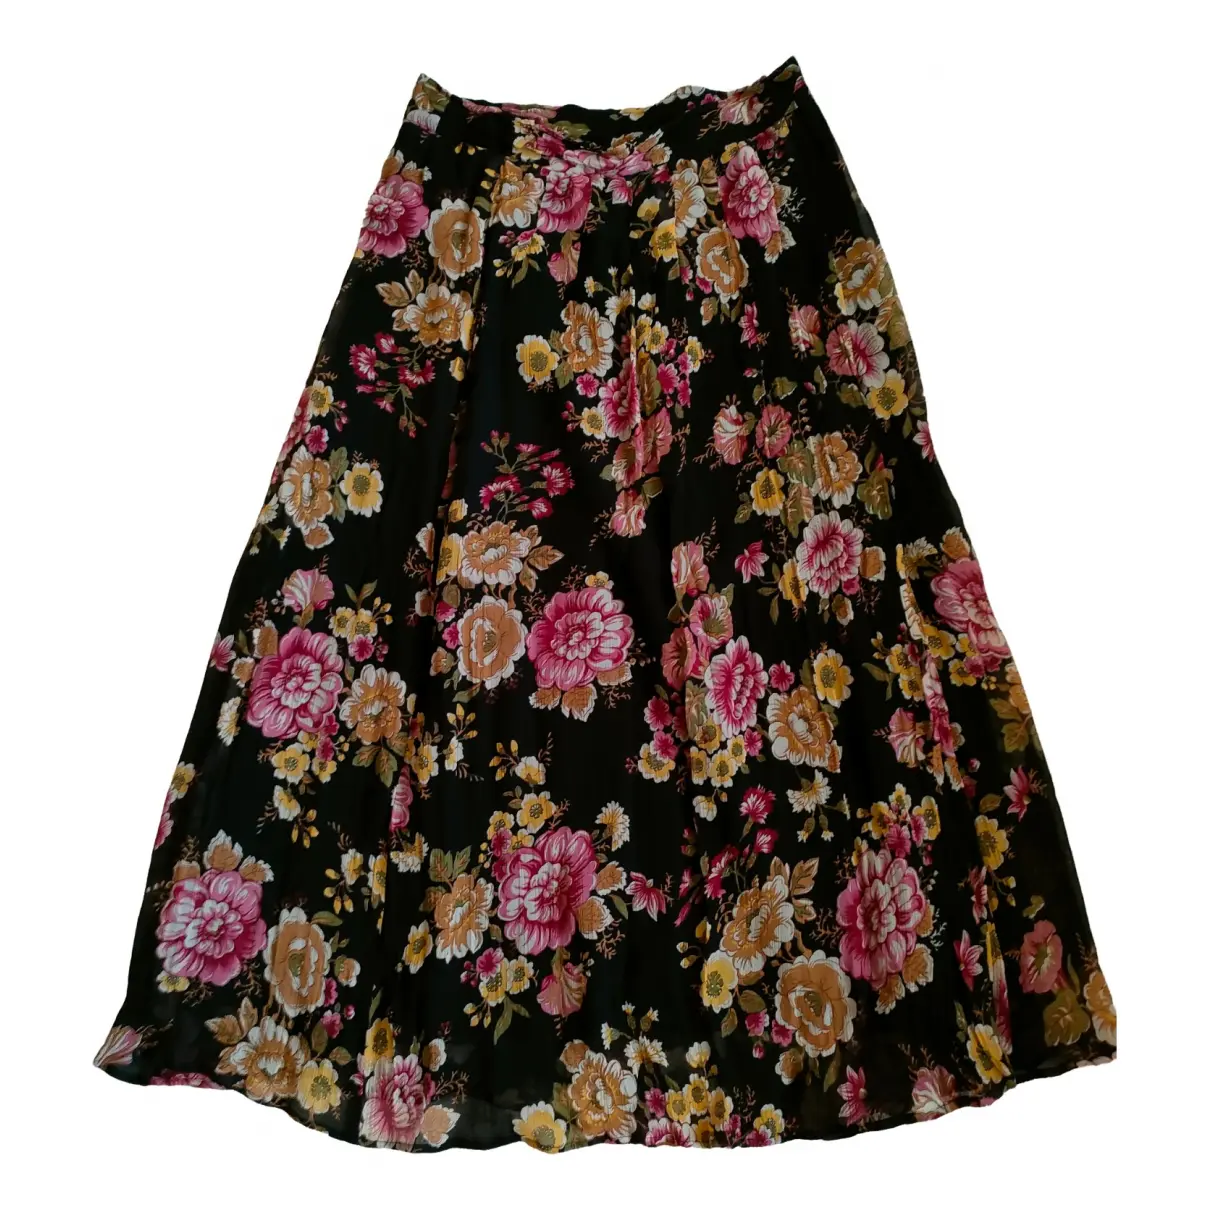 Spring Summer 2020 mid-length skirt Sézane